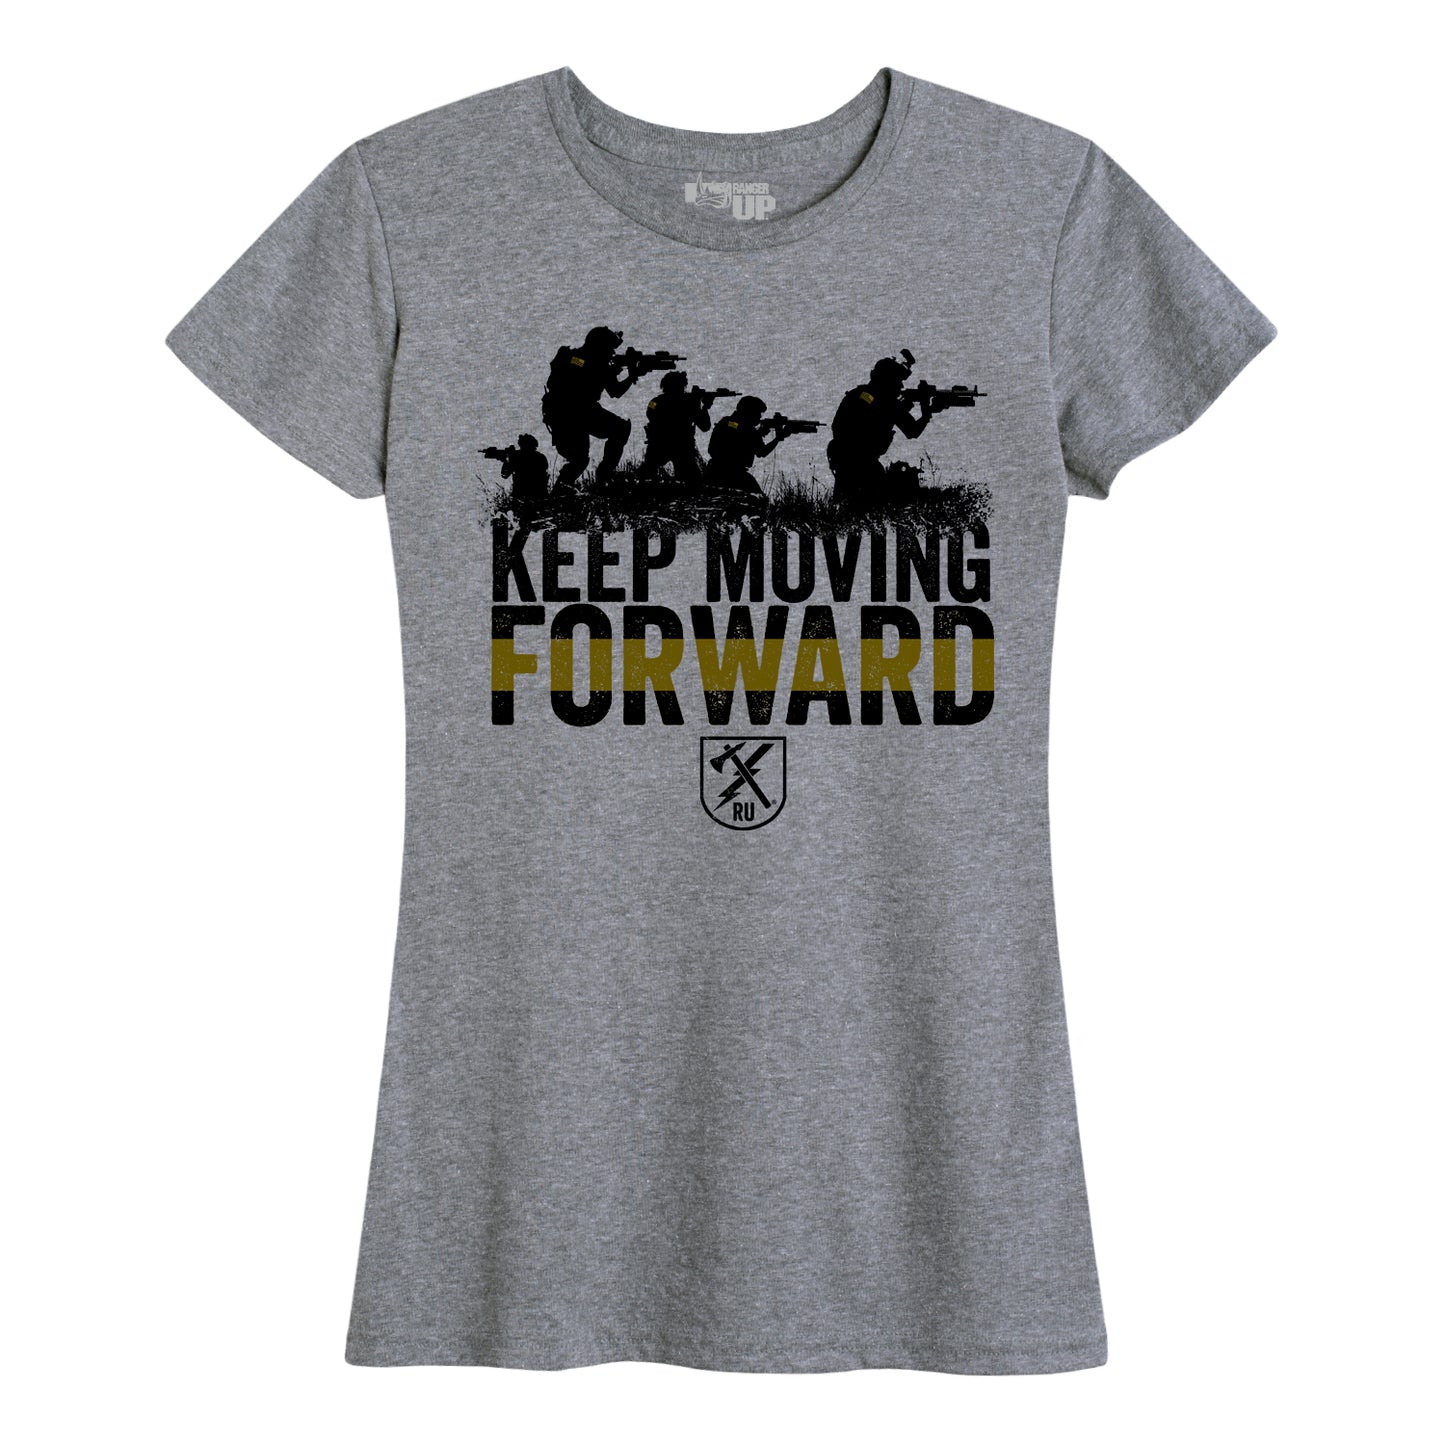 Women's Keep Moving Forward (Army) Tee